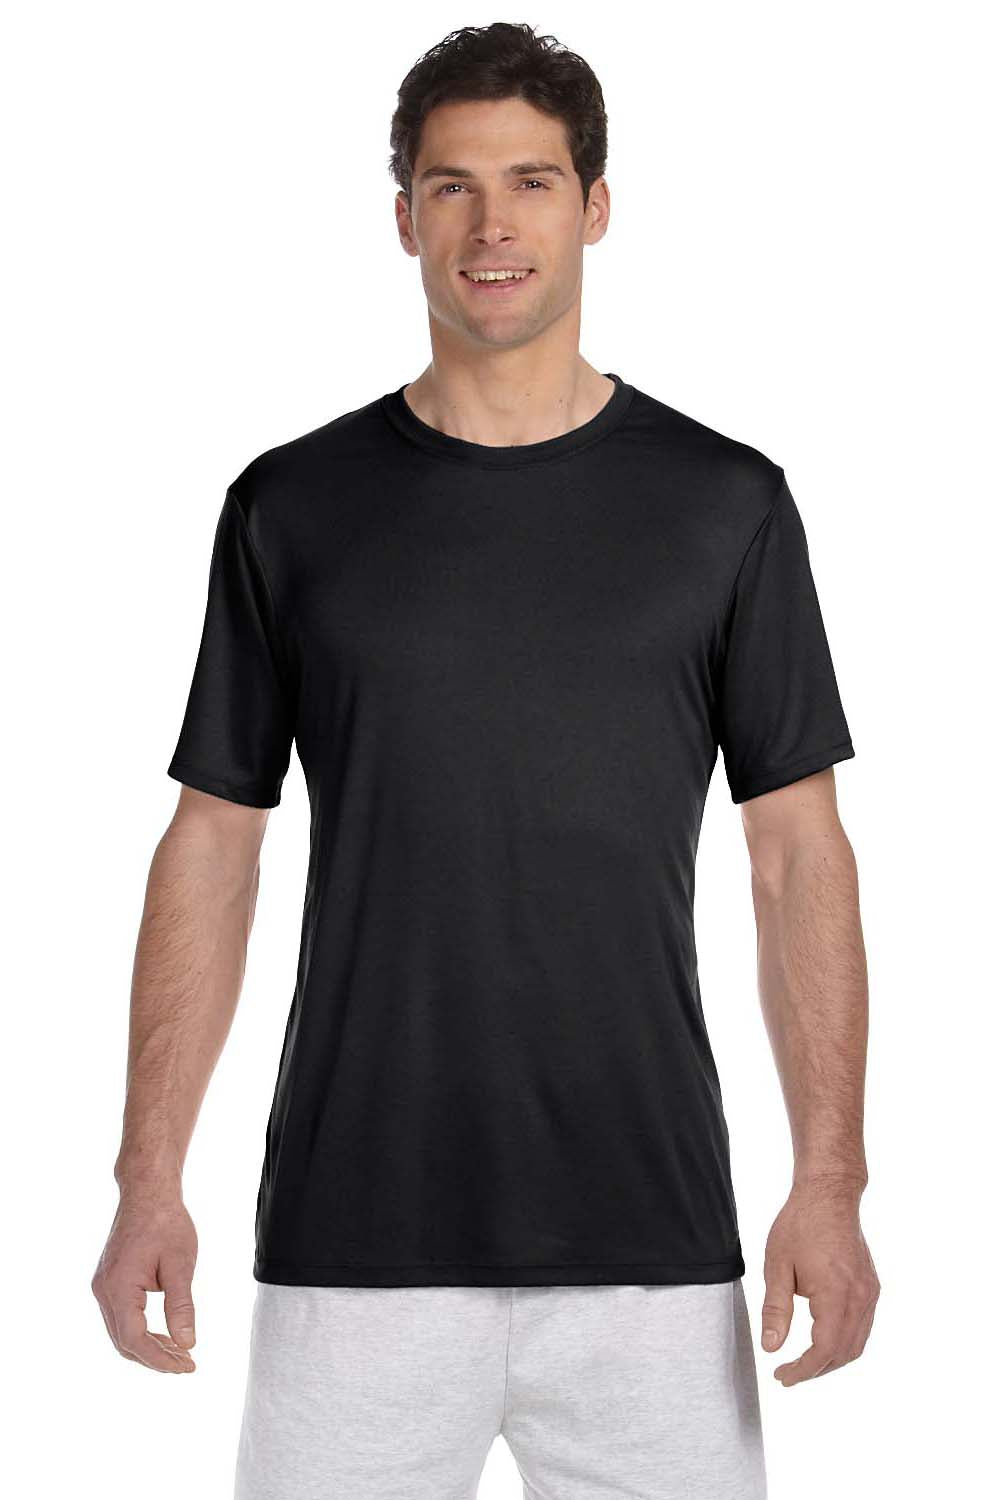 Hanes 4820 Mens Cool DRI FreshIQ Moisture Wicking Short Sleeve Crewneck T-Shirt Black Front